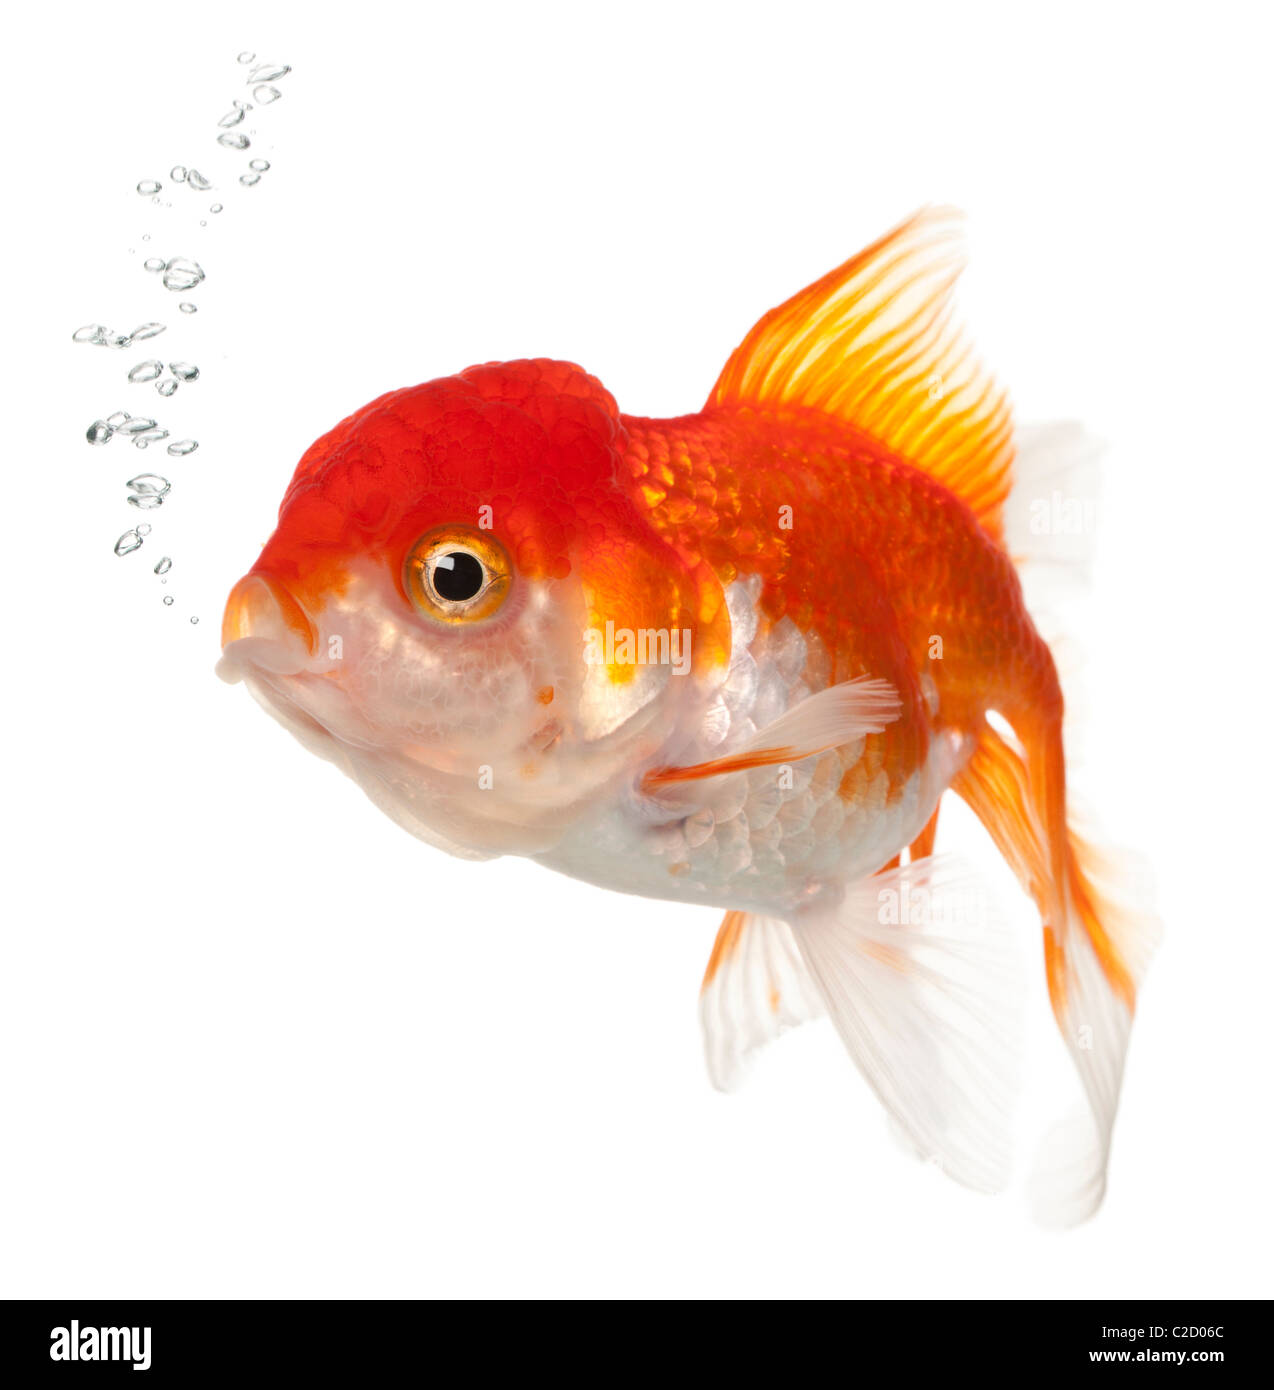 Lionhead goldfish, Carassius auratus, in front of white background Banque D'Images